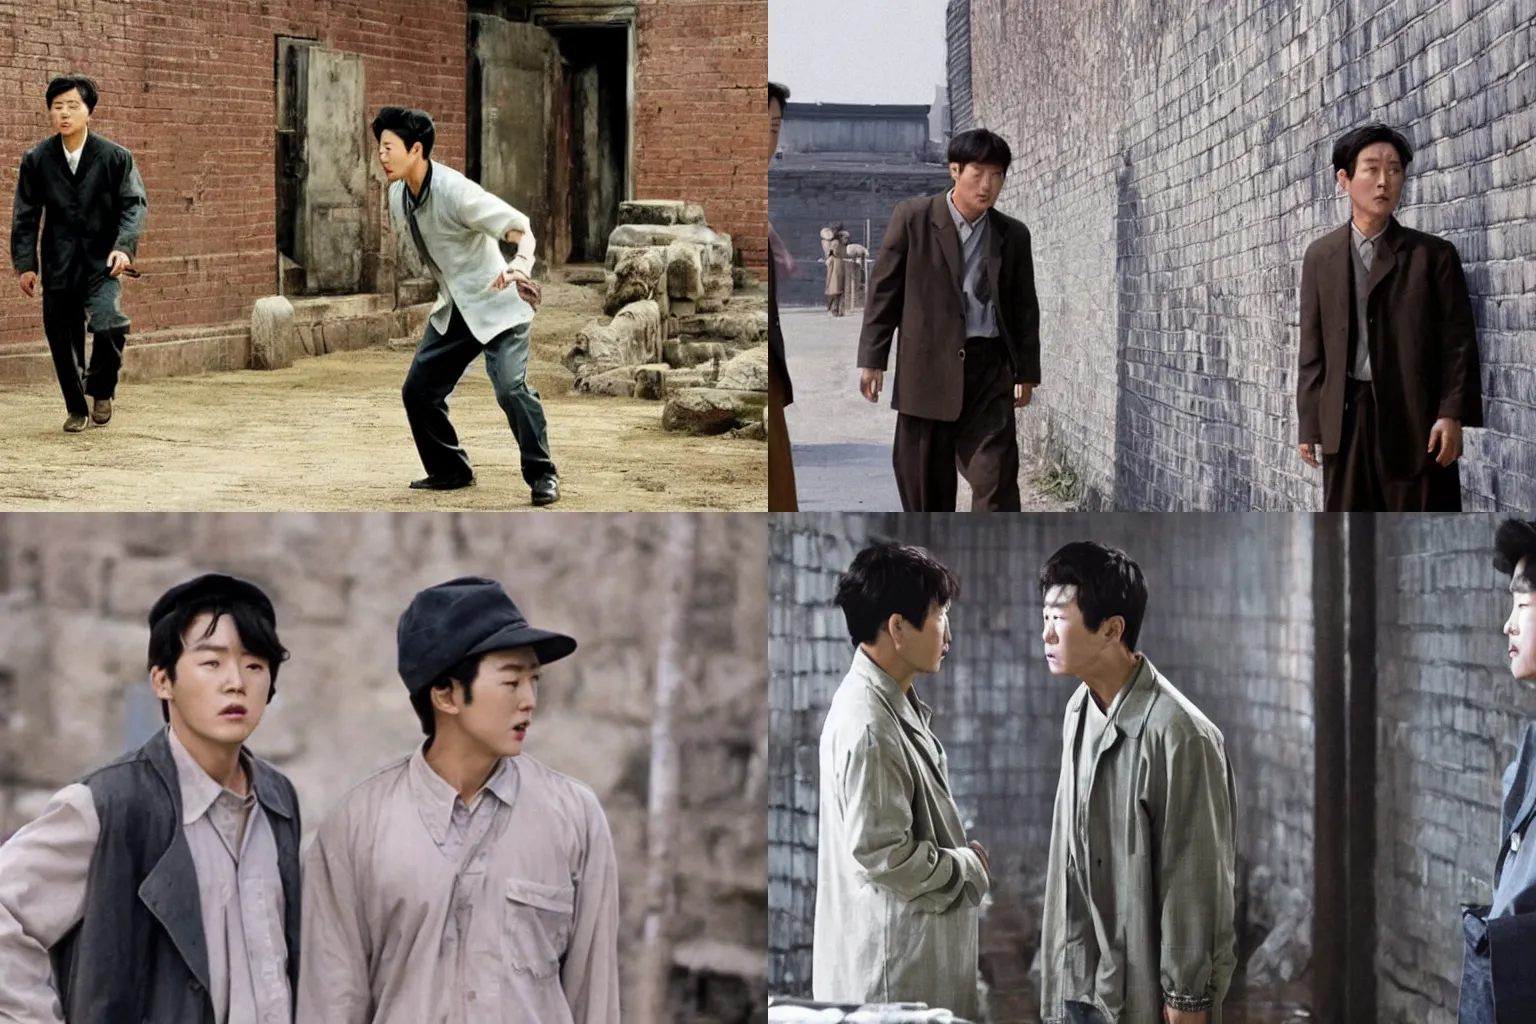 Prompt: korean film still from korean adaptation of The Shawshank Redemption